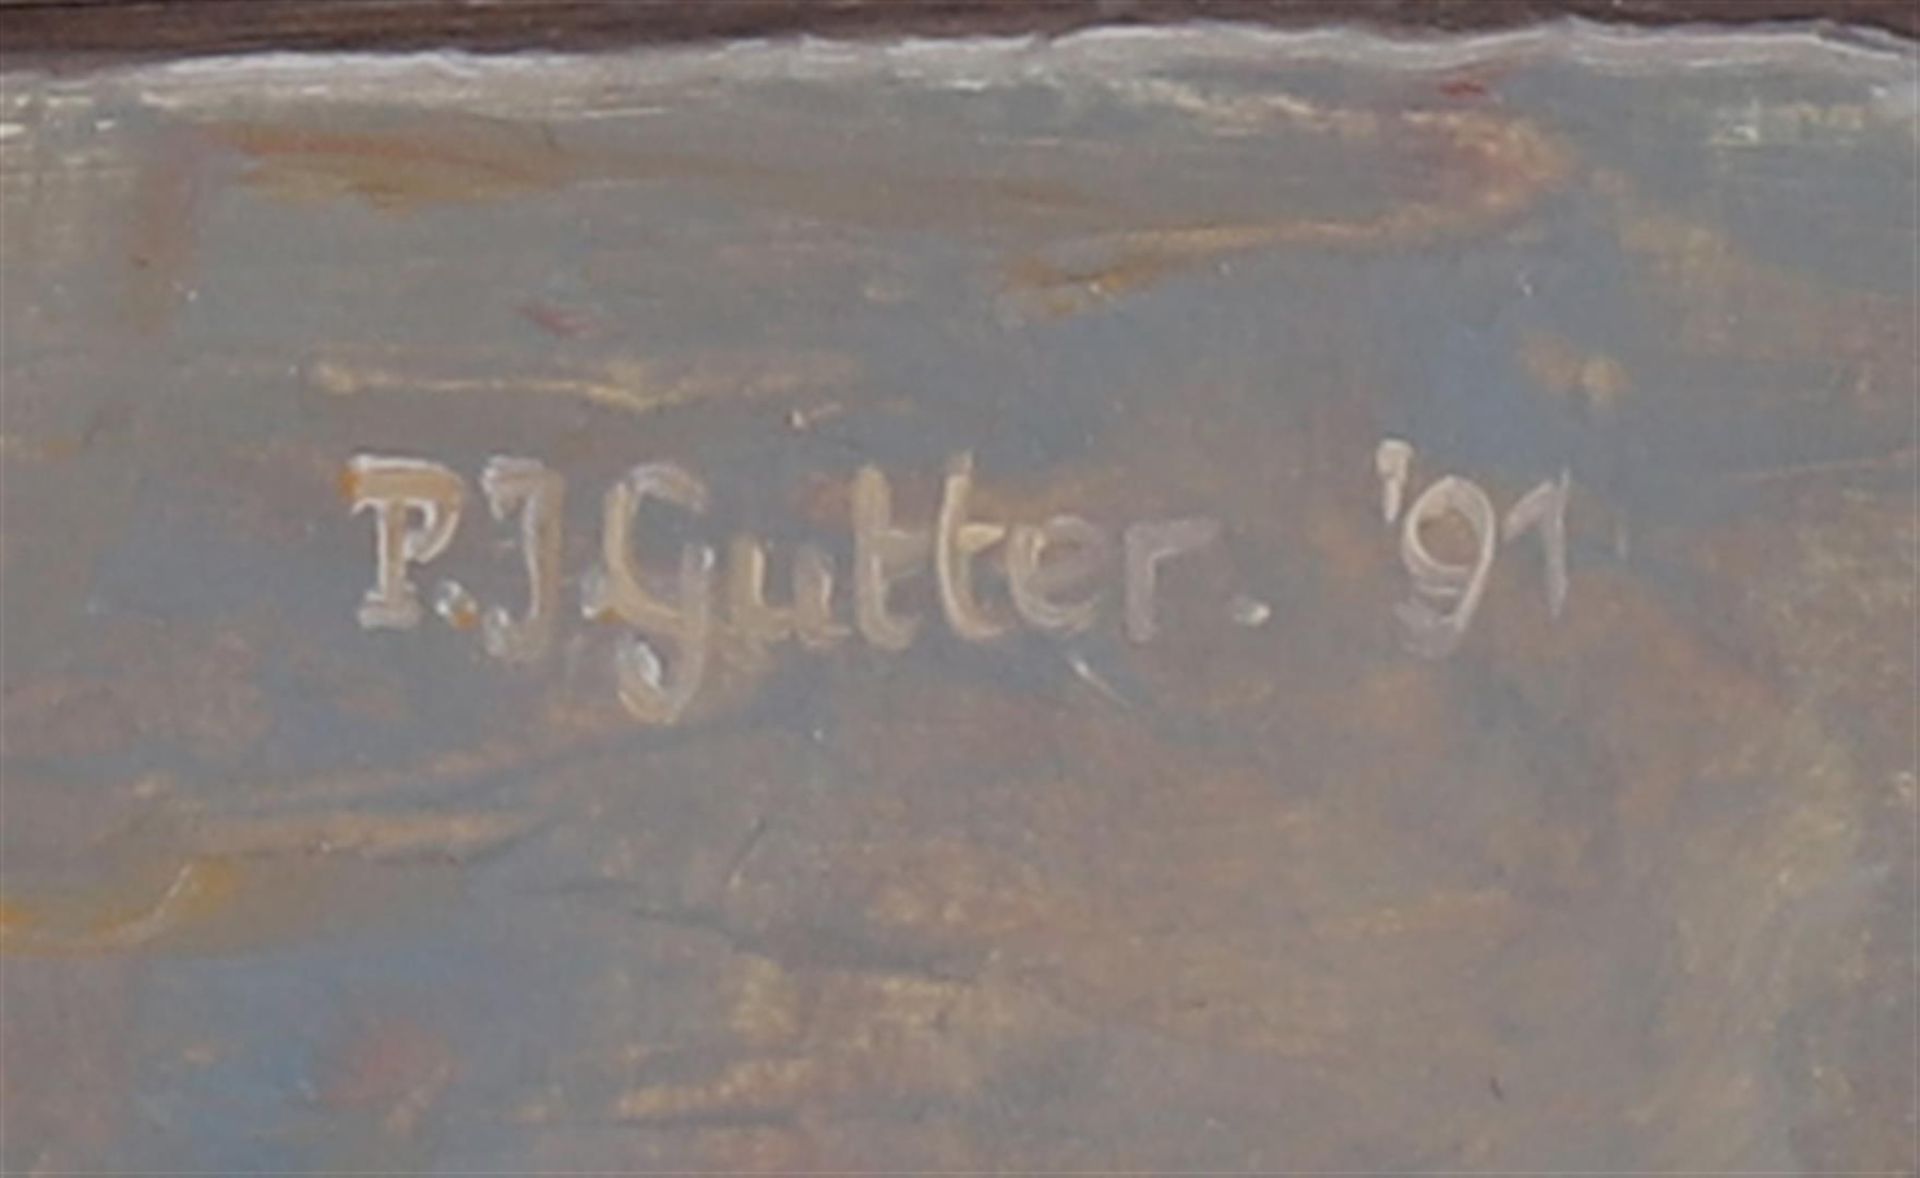 Gutter, Pieter (Piet) (1944) "Still life medicine bottles", signed in full right and '91, oil - Image 2 of 2